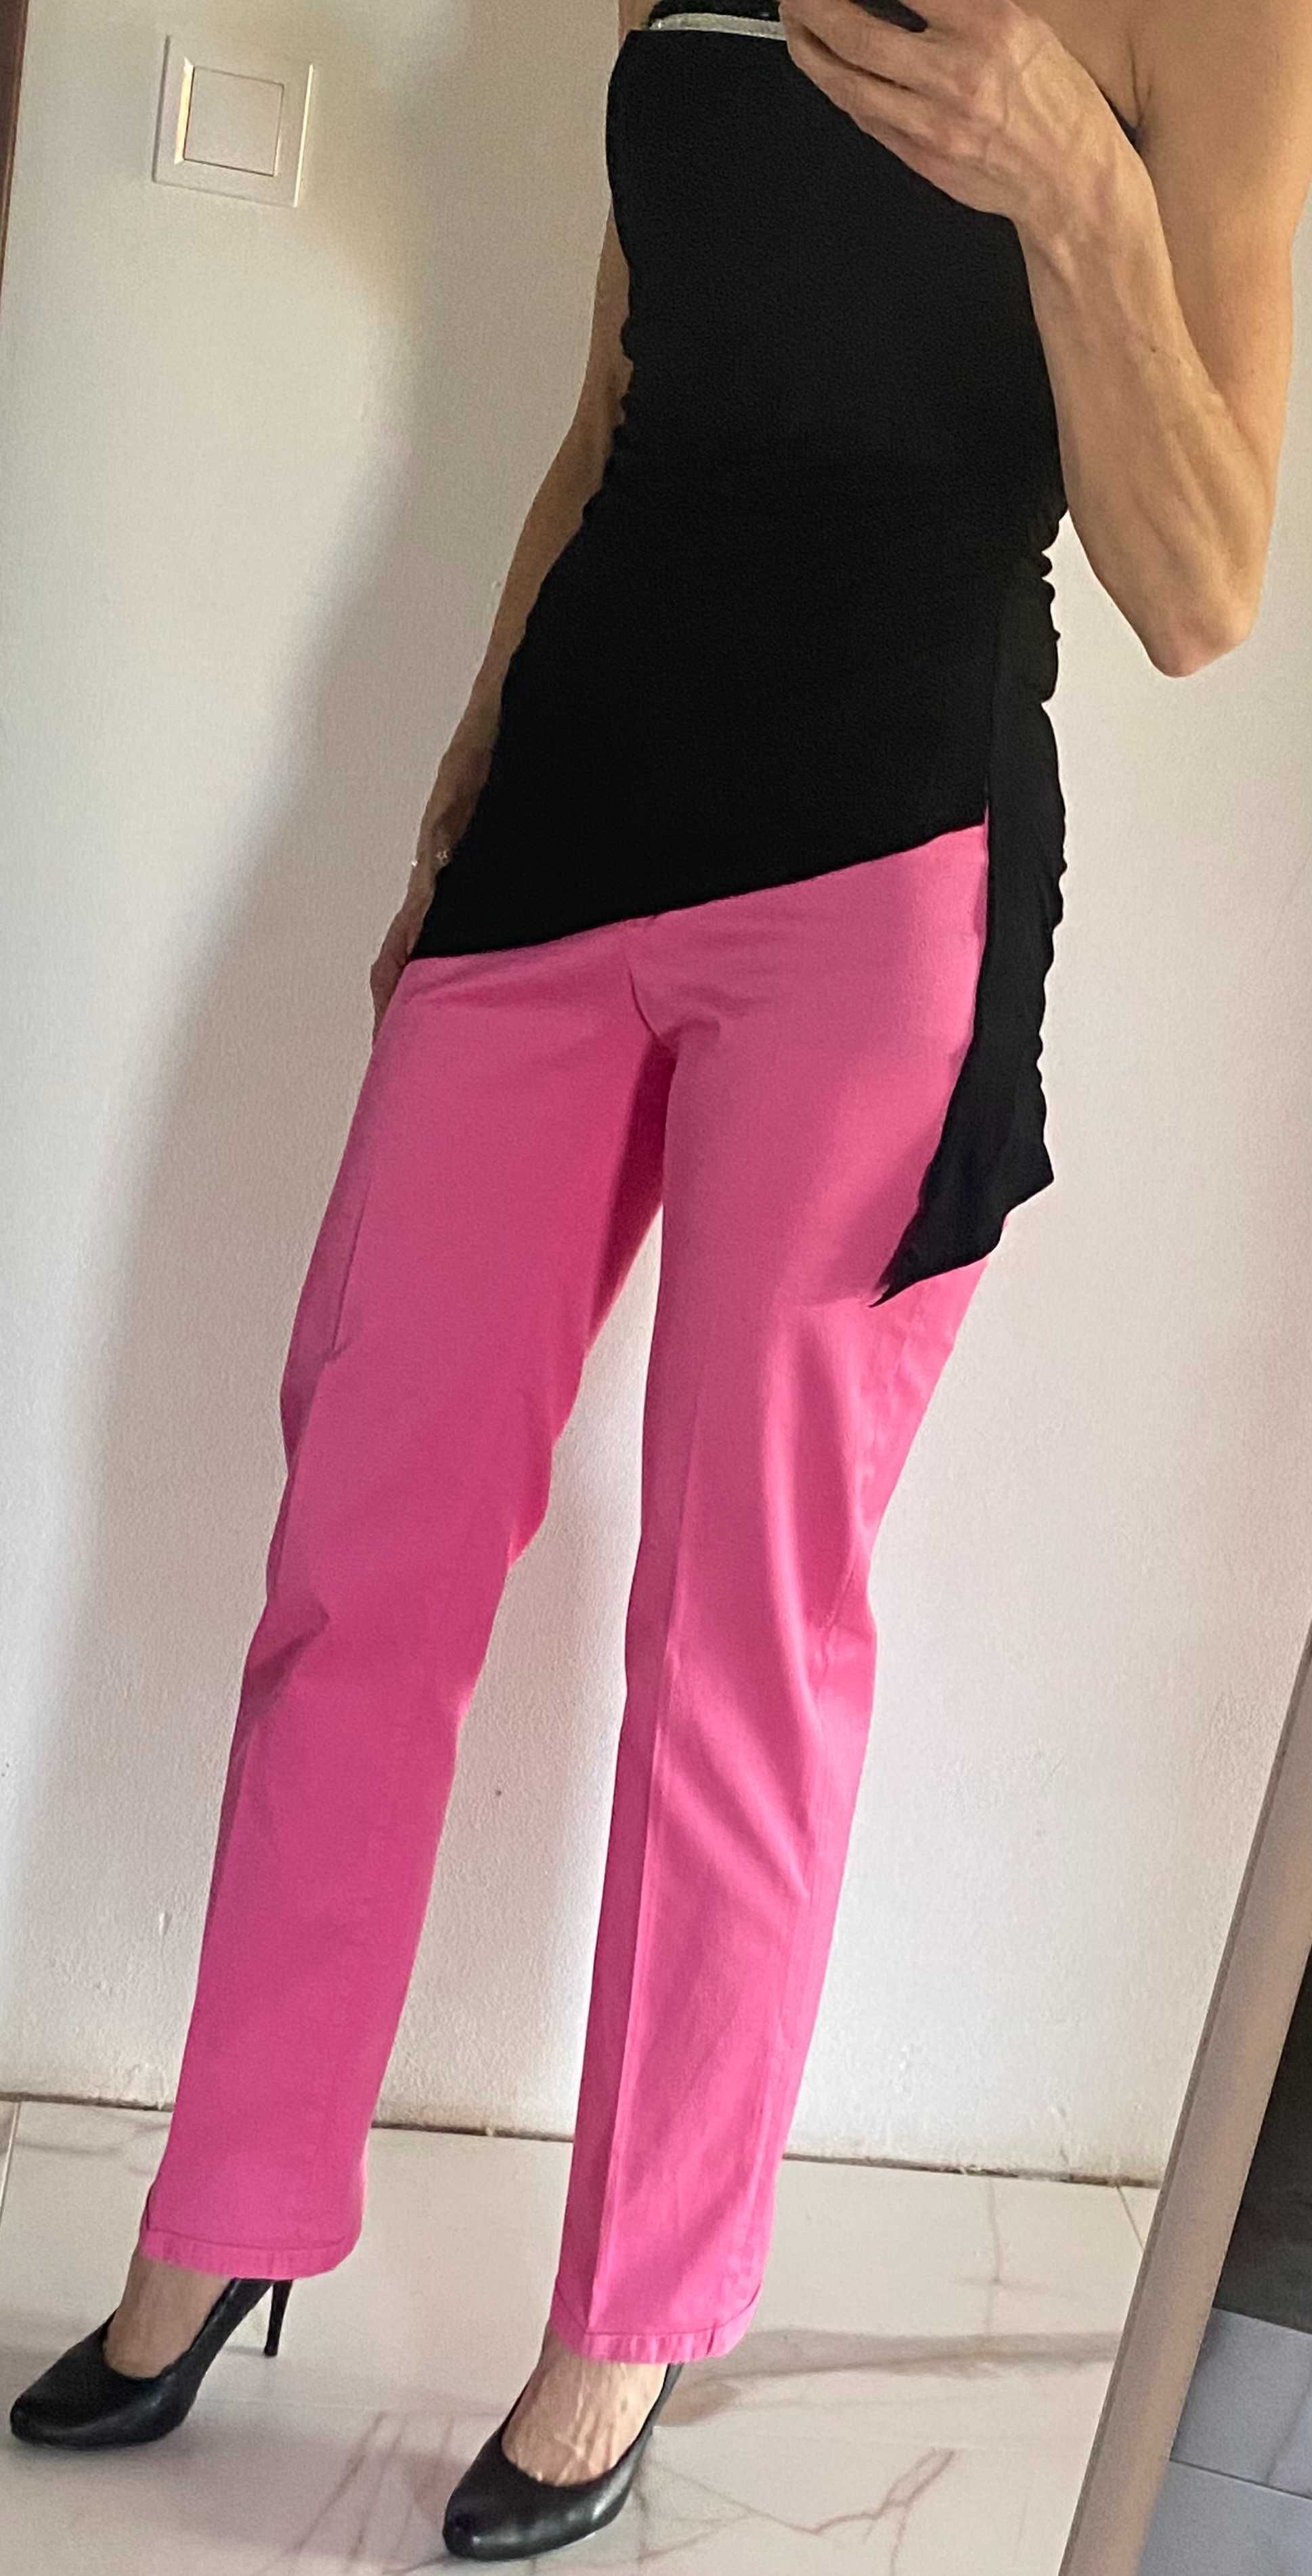 TERRANOVA różowe SUPER spodnie r. 27 S b. db. stanie + top gratis